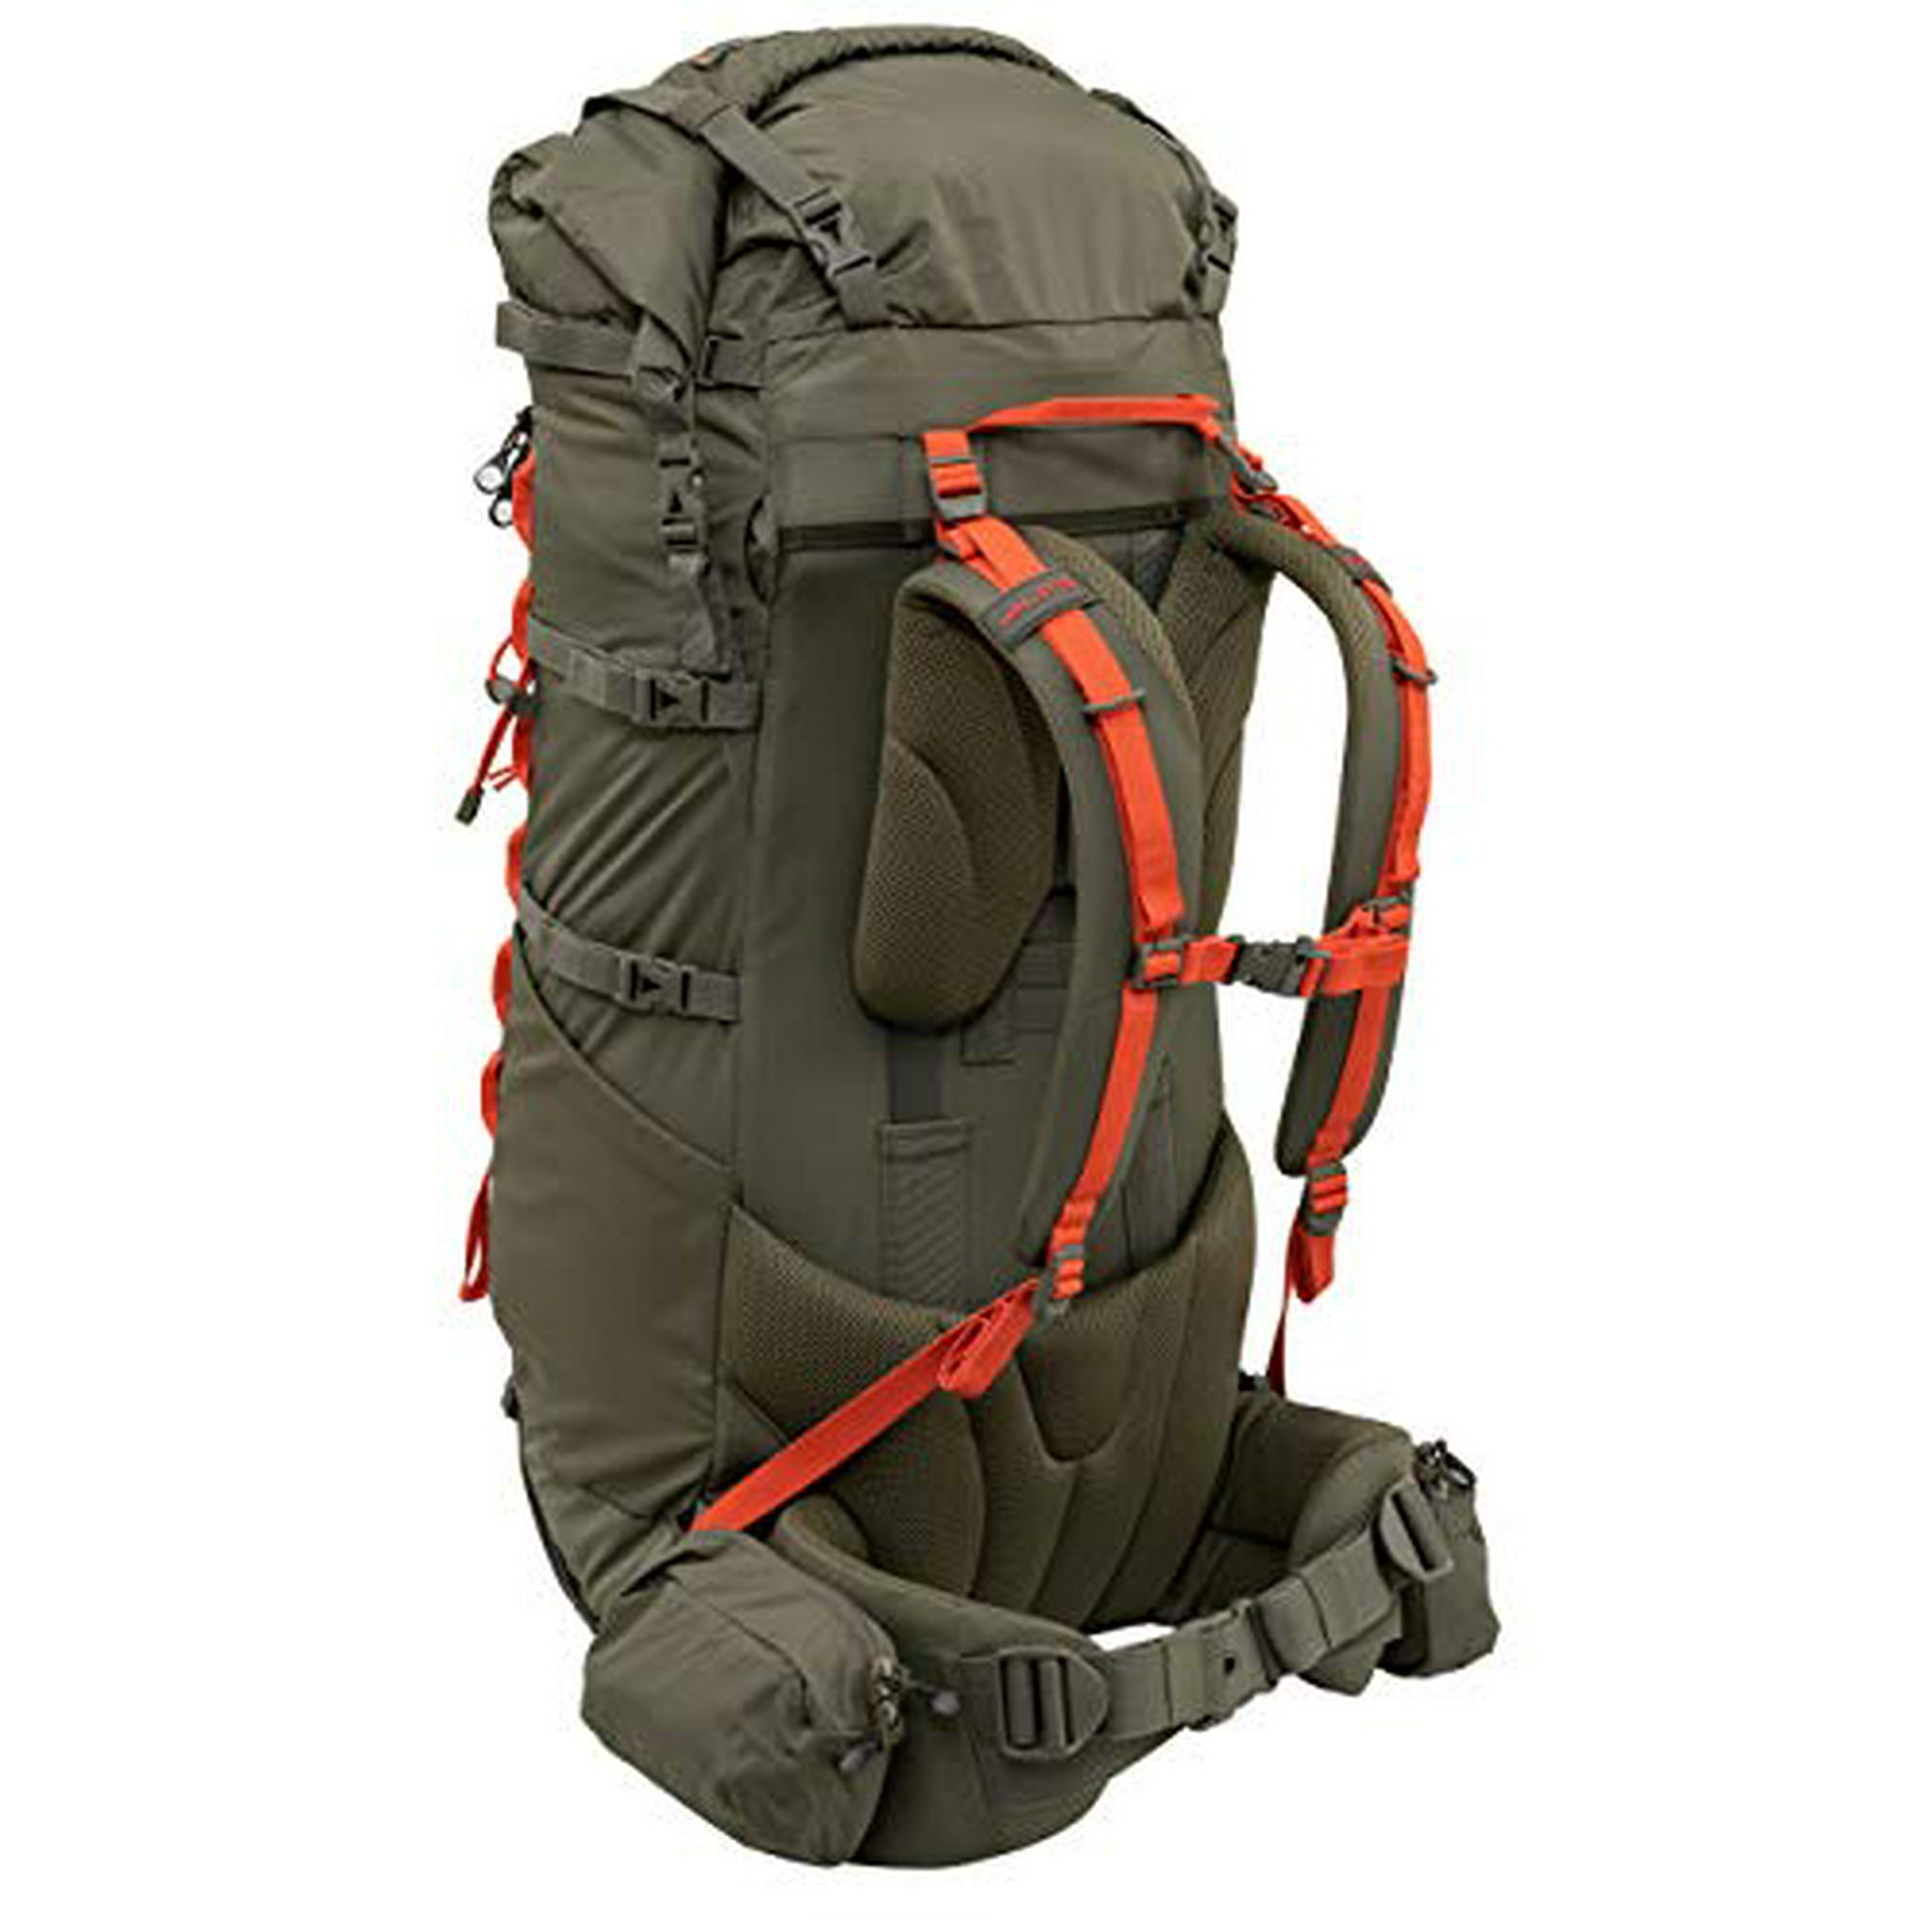 bedrag Verouderd criticus ALPS Mountaineering Nomad RT 75L Pack - Clay/Chili | Walmart Canada